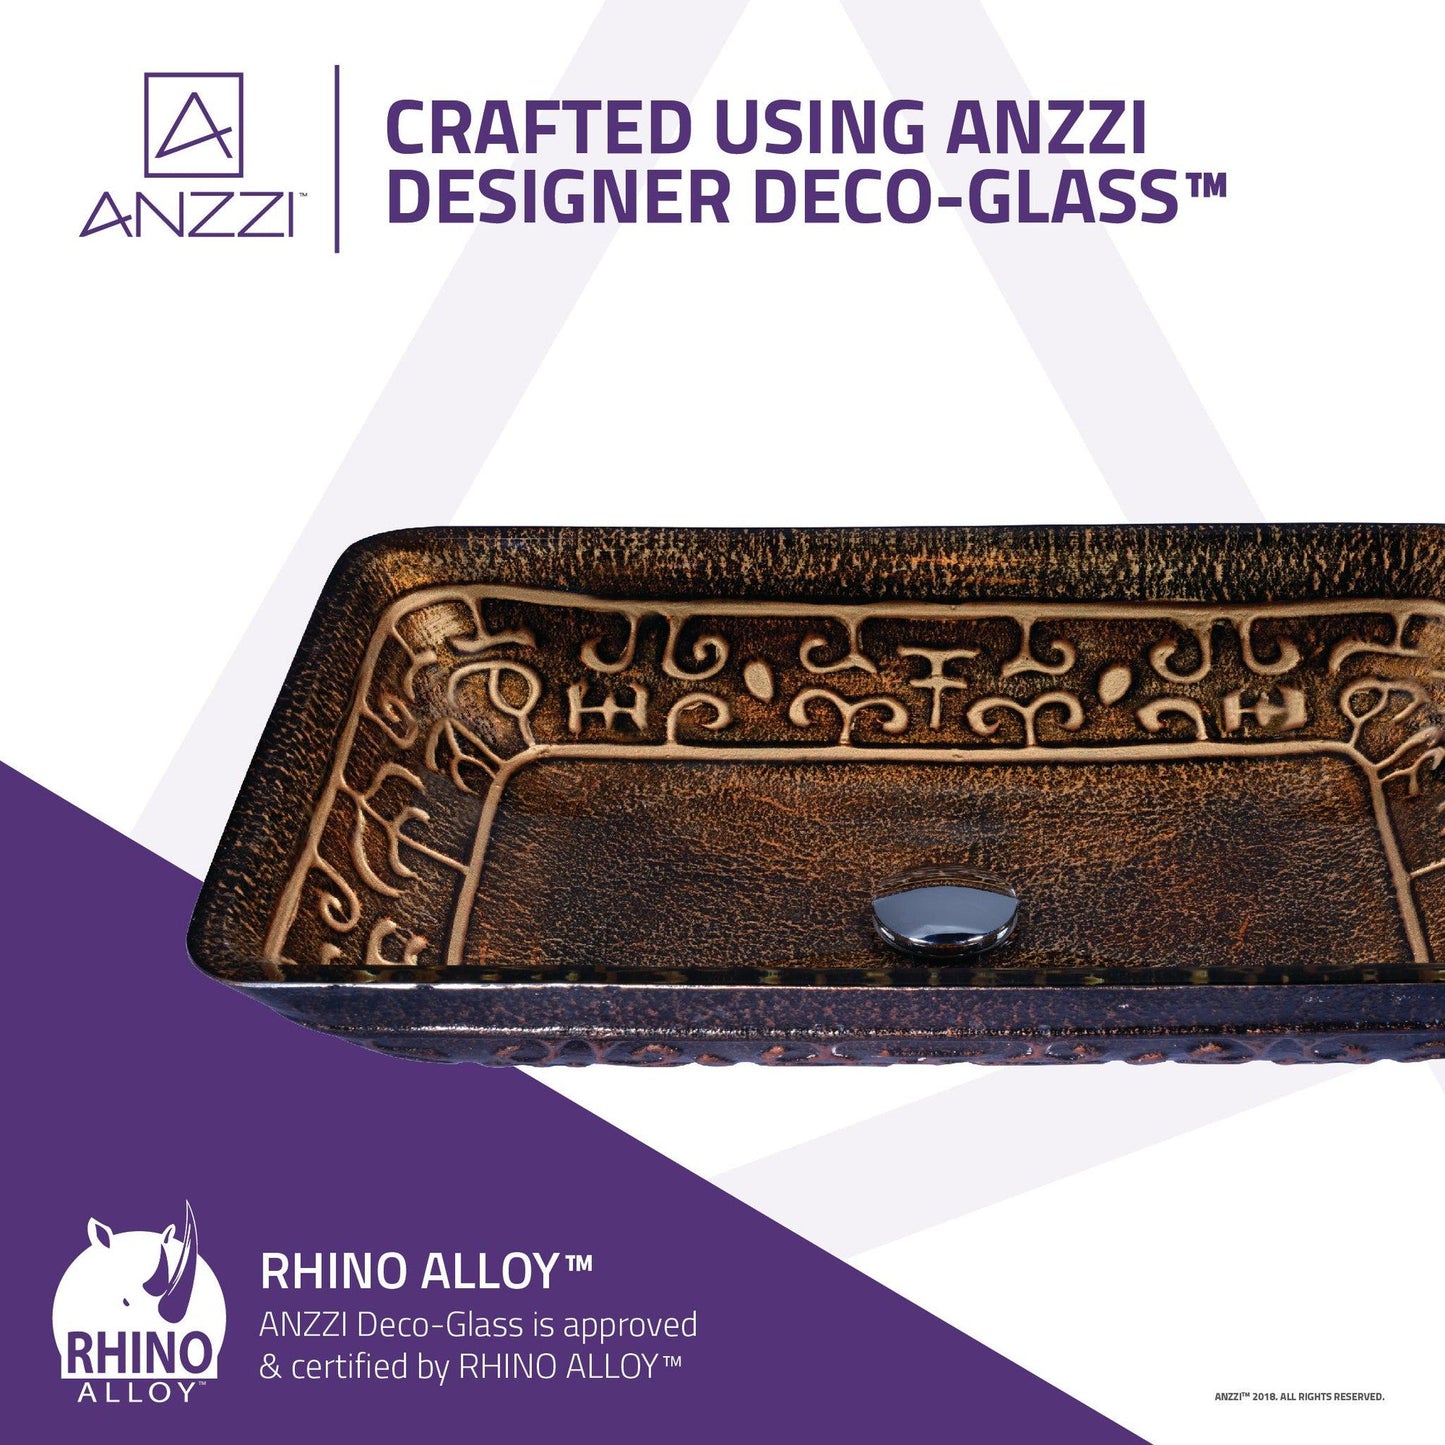 ANZZI Tuasavi Series 23" x 14" Rectangular Macedonian Bronze Vessel Sink With Polished Chrome Pop-Up Drain